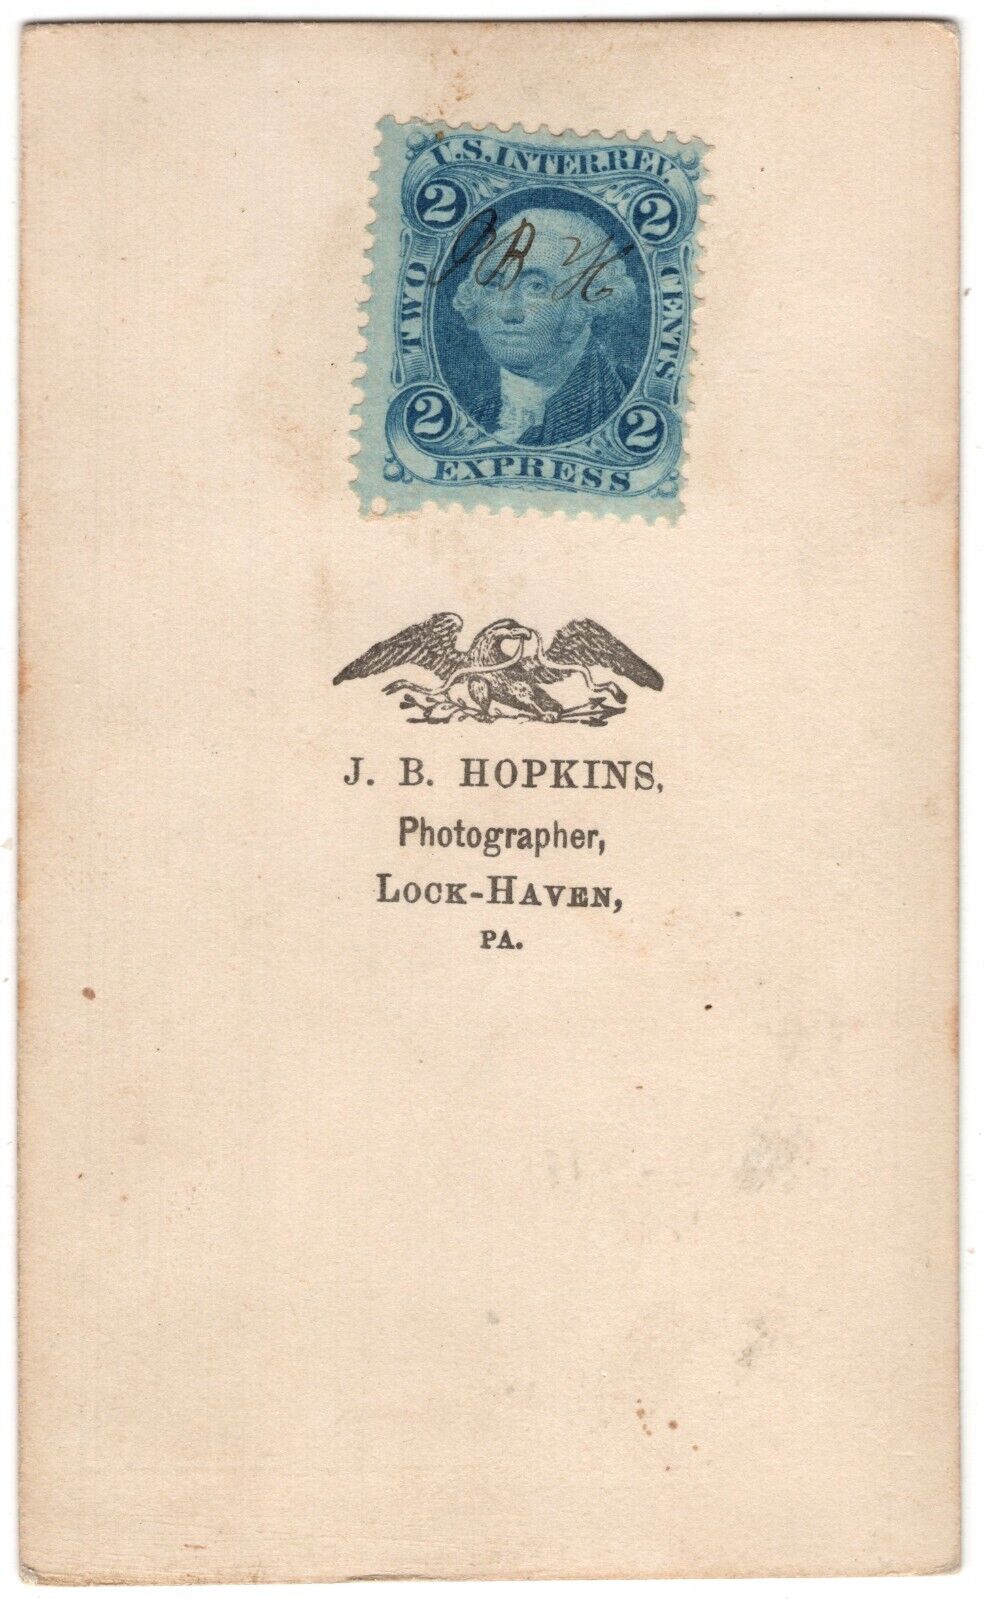 CIRCA 1860s CDV 2c WASHINGTON EXPRESS CIVIL WAR TAX STAMP J.B. HOPKINS PA